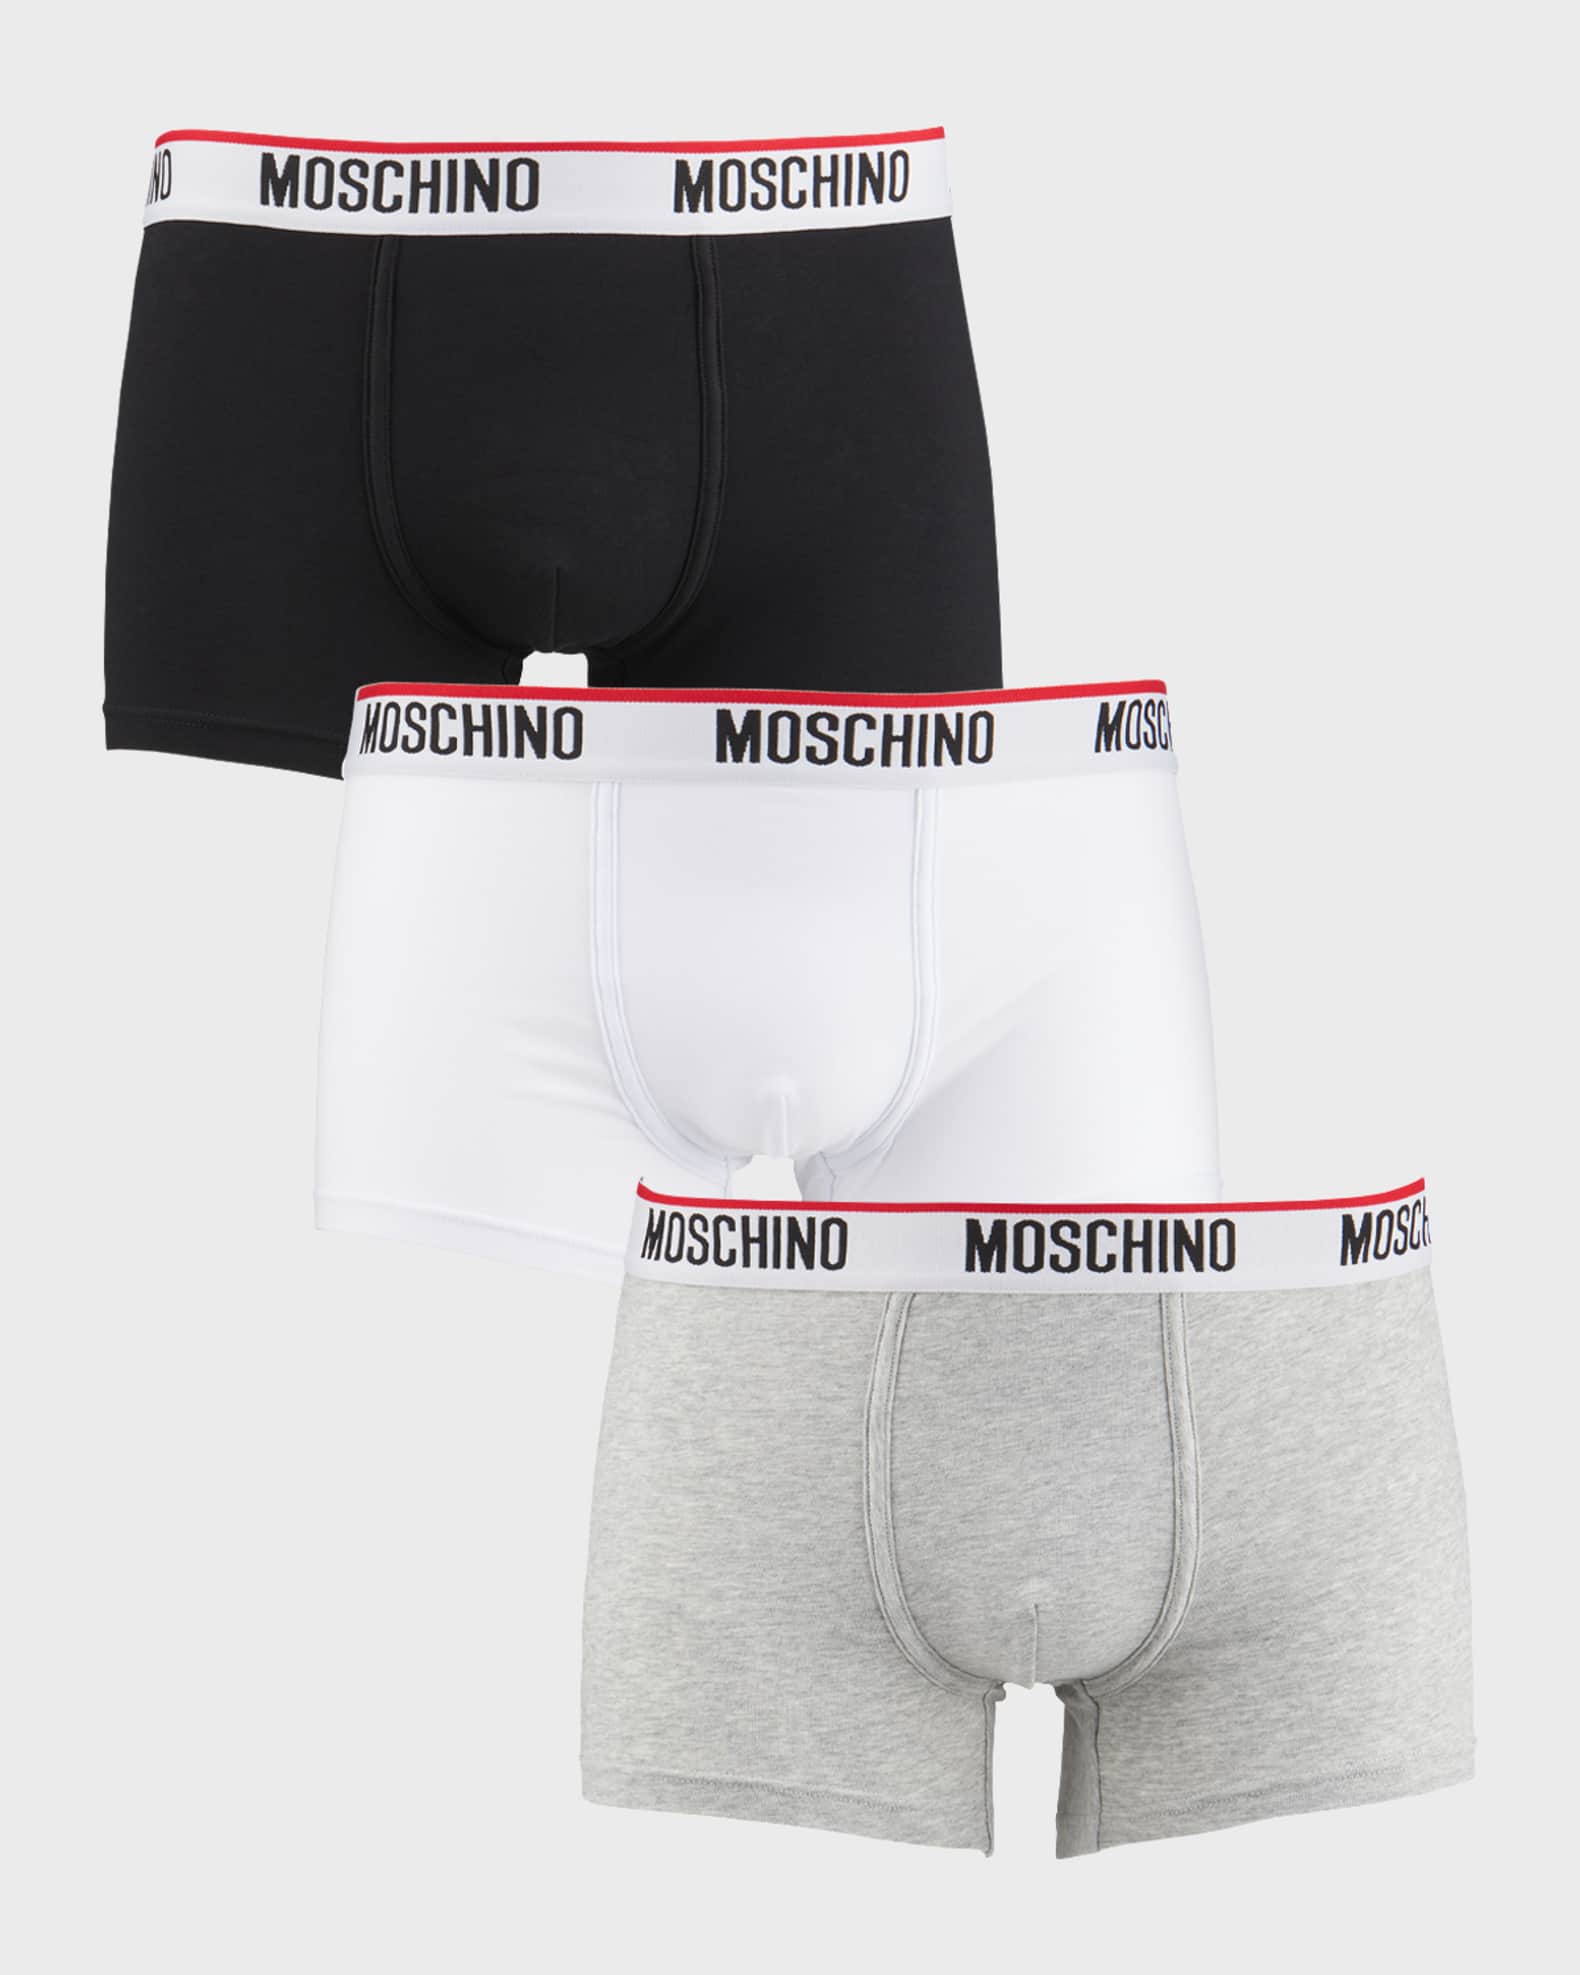 Moschino Men's Basic Tripack Boxer Briefs